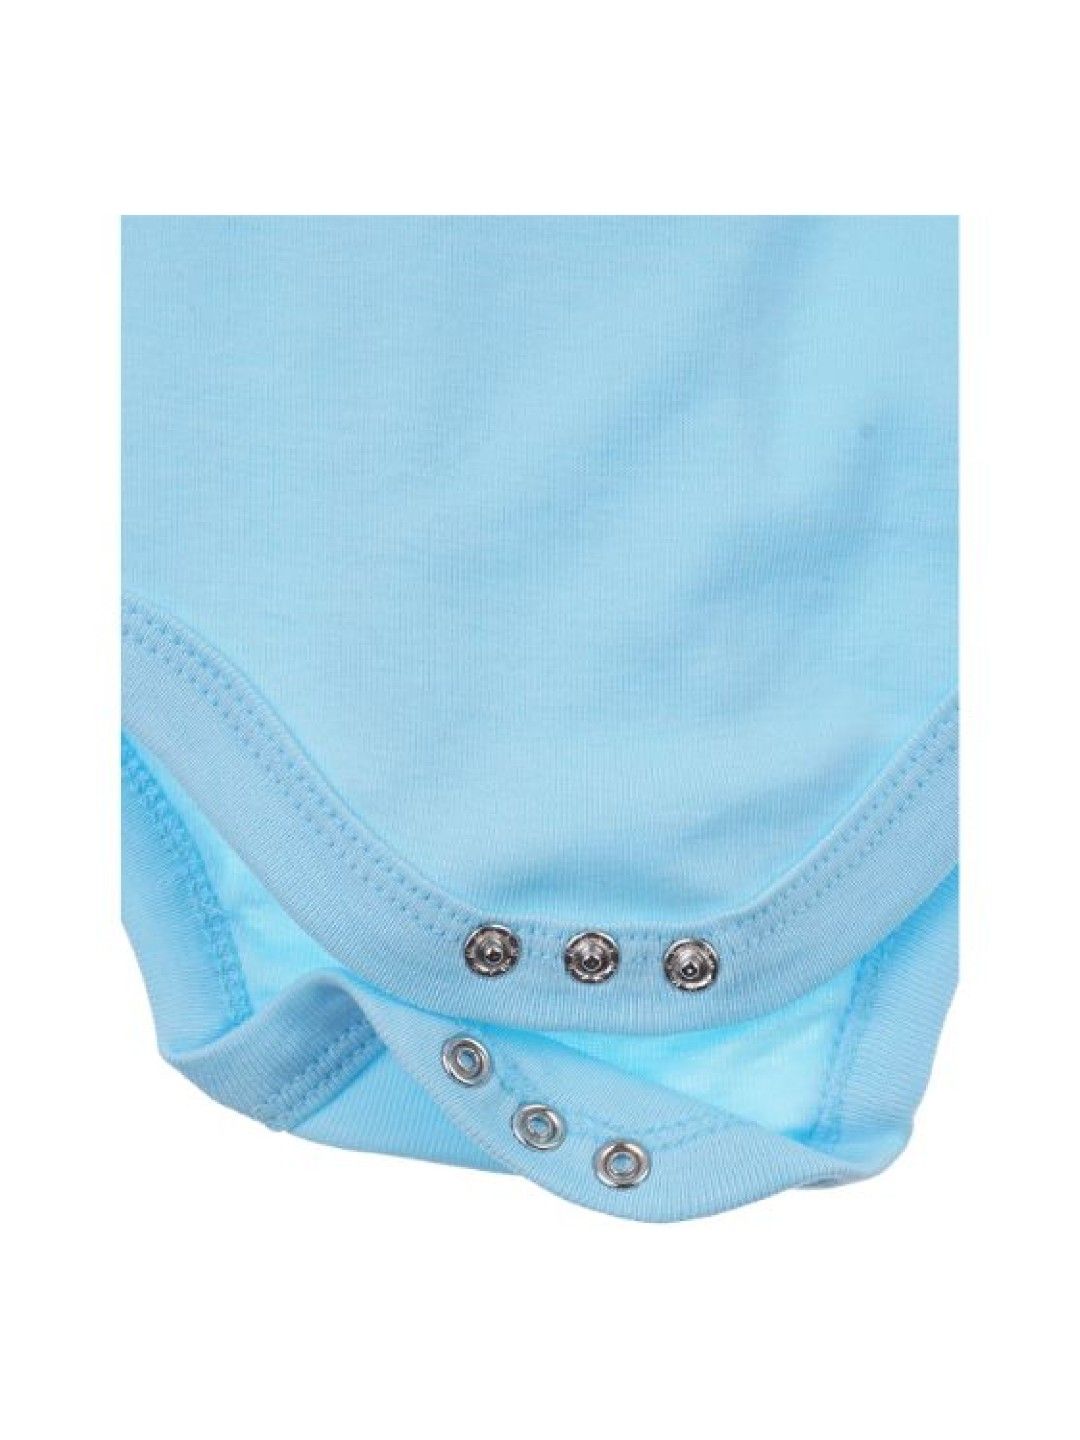 bean fashion Babycosy Organic Short Sleeved Body (Sky Blue- Image 3)